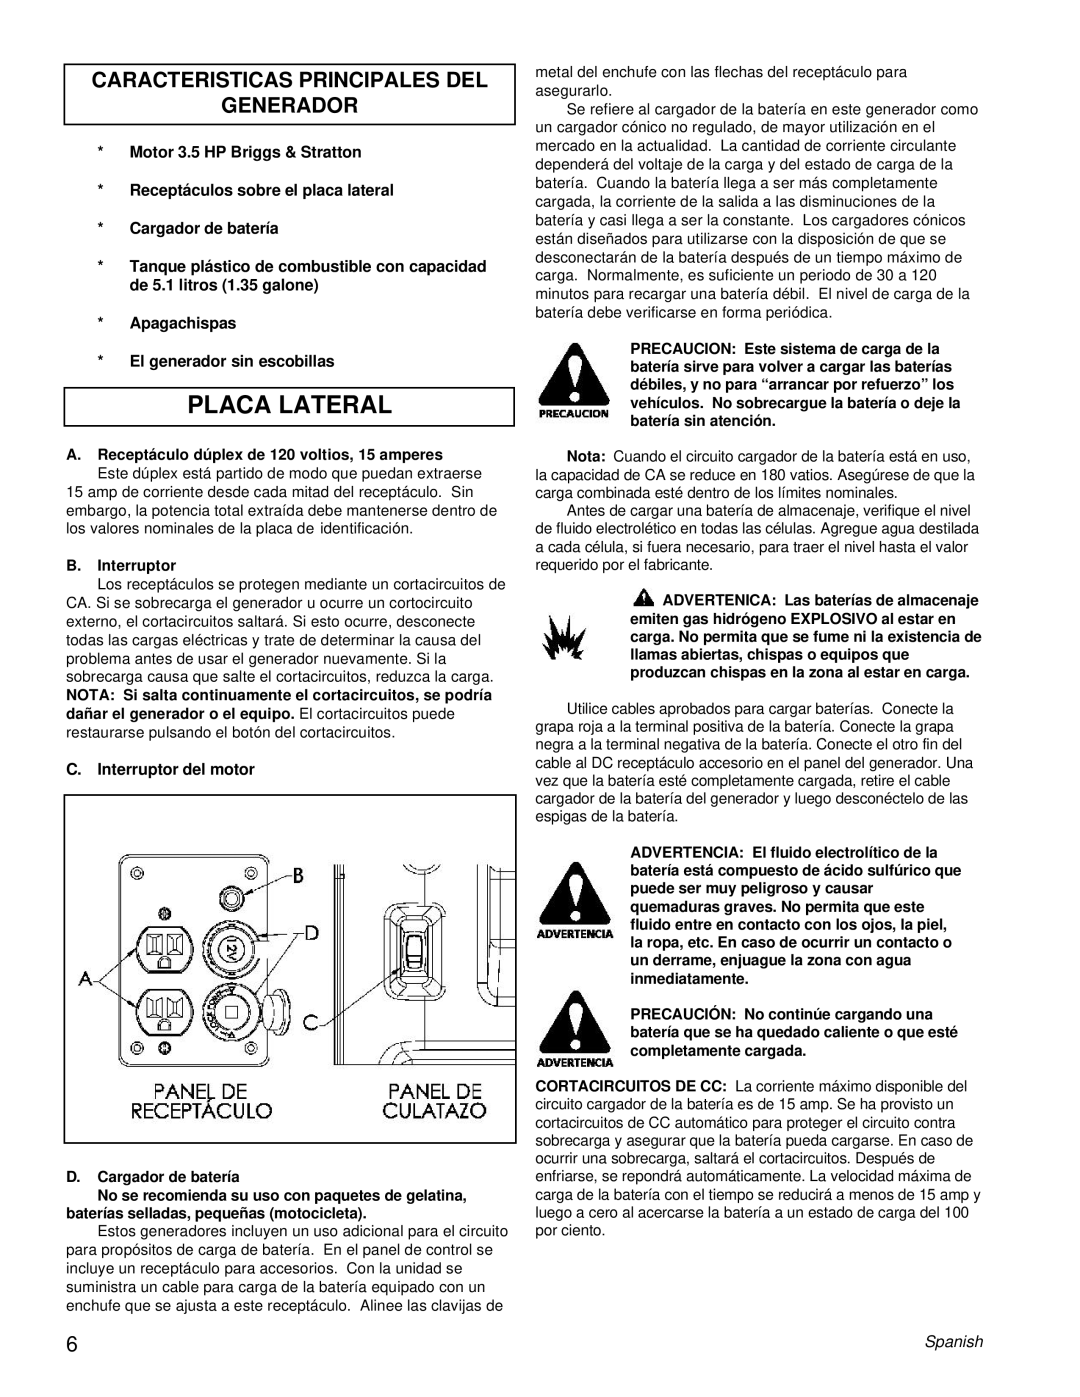 Powermate PM0401853 manual Placa Lateral, Caracteristicas Principales Del Generador 